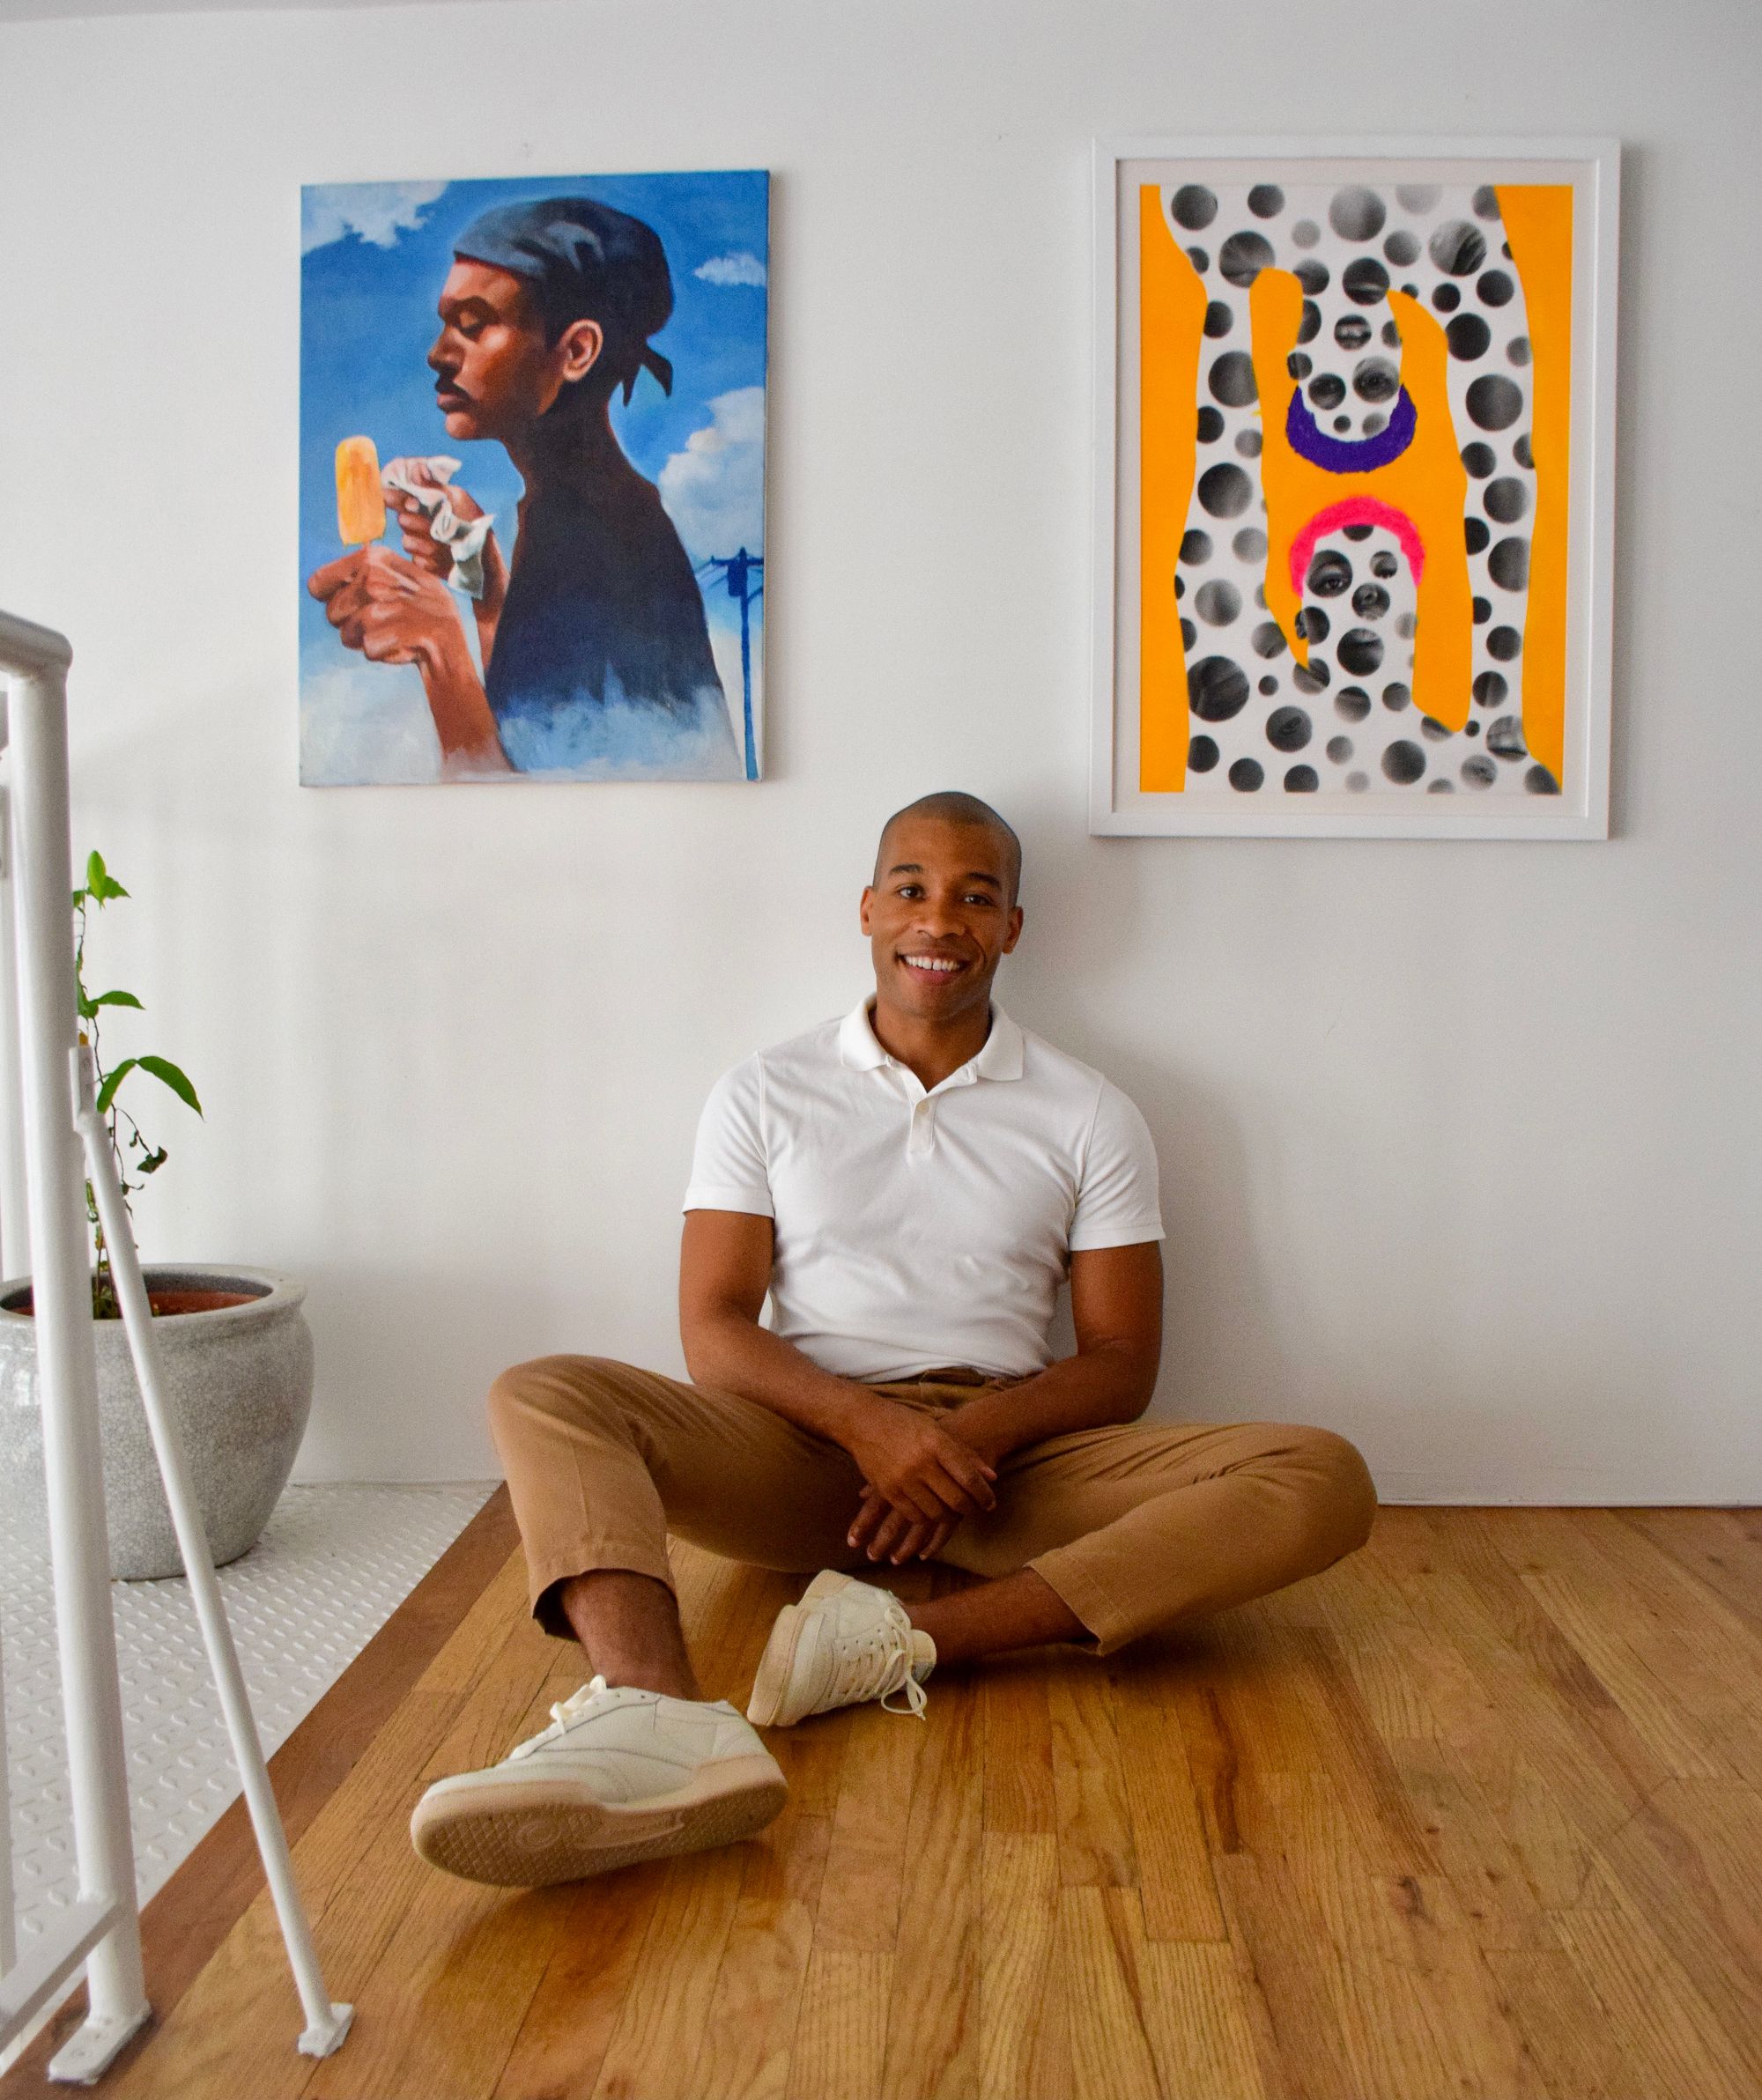                      Phillip Collins Launches GOOD BLACK ART - the destination for Affordable Black Artwork                             
                     